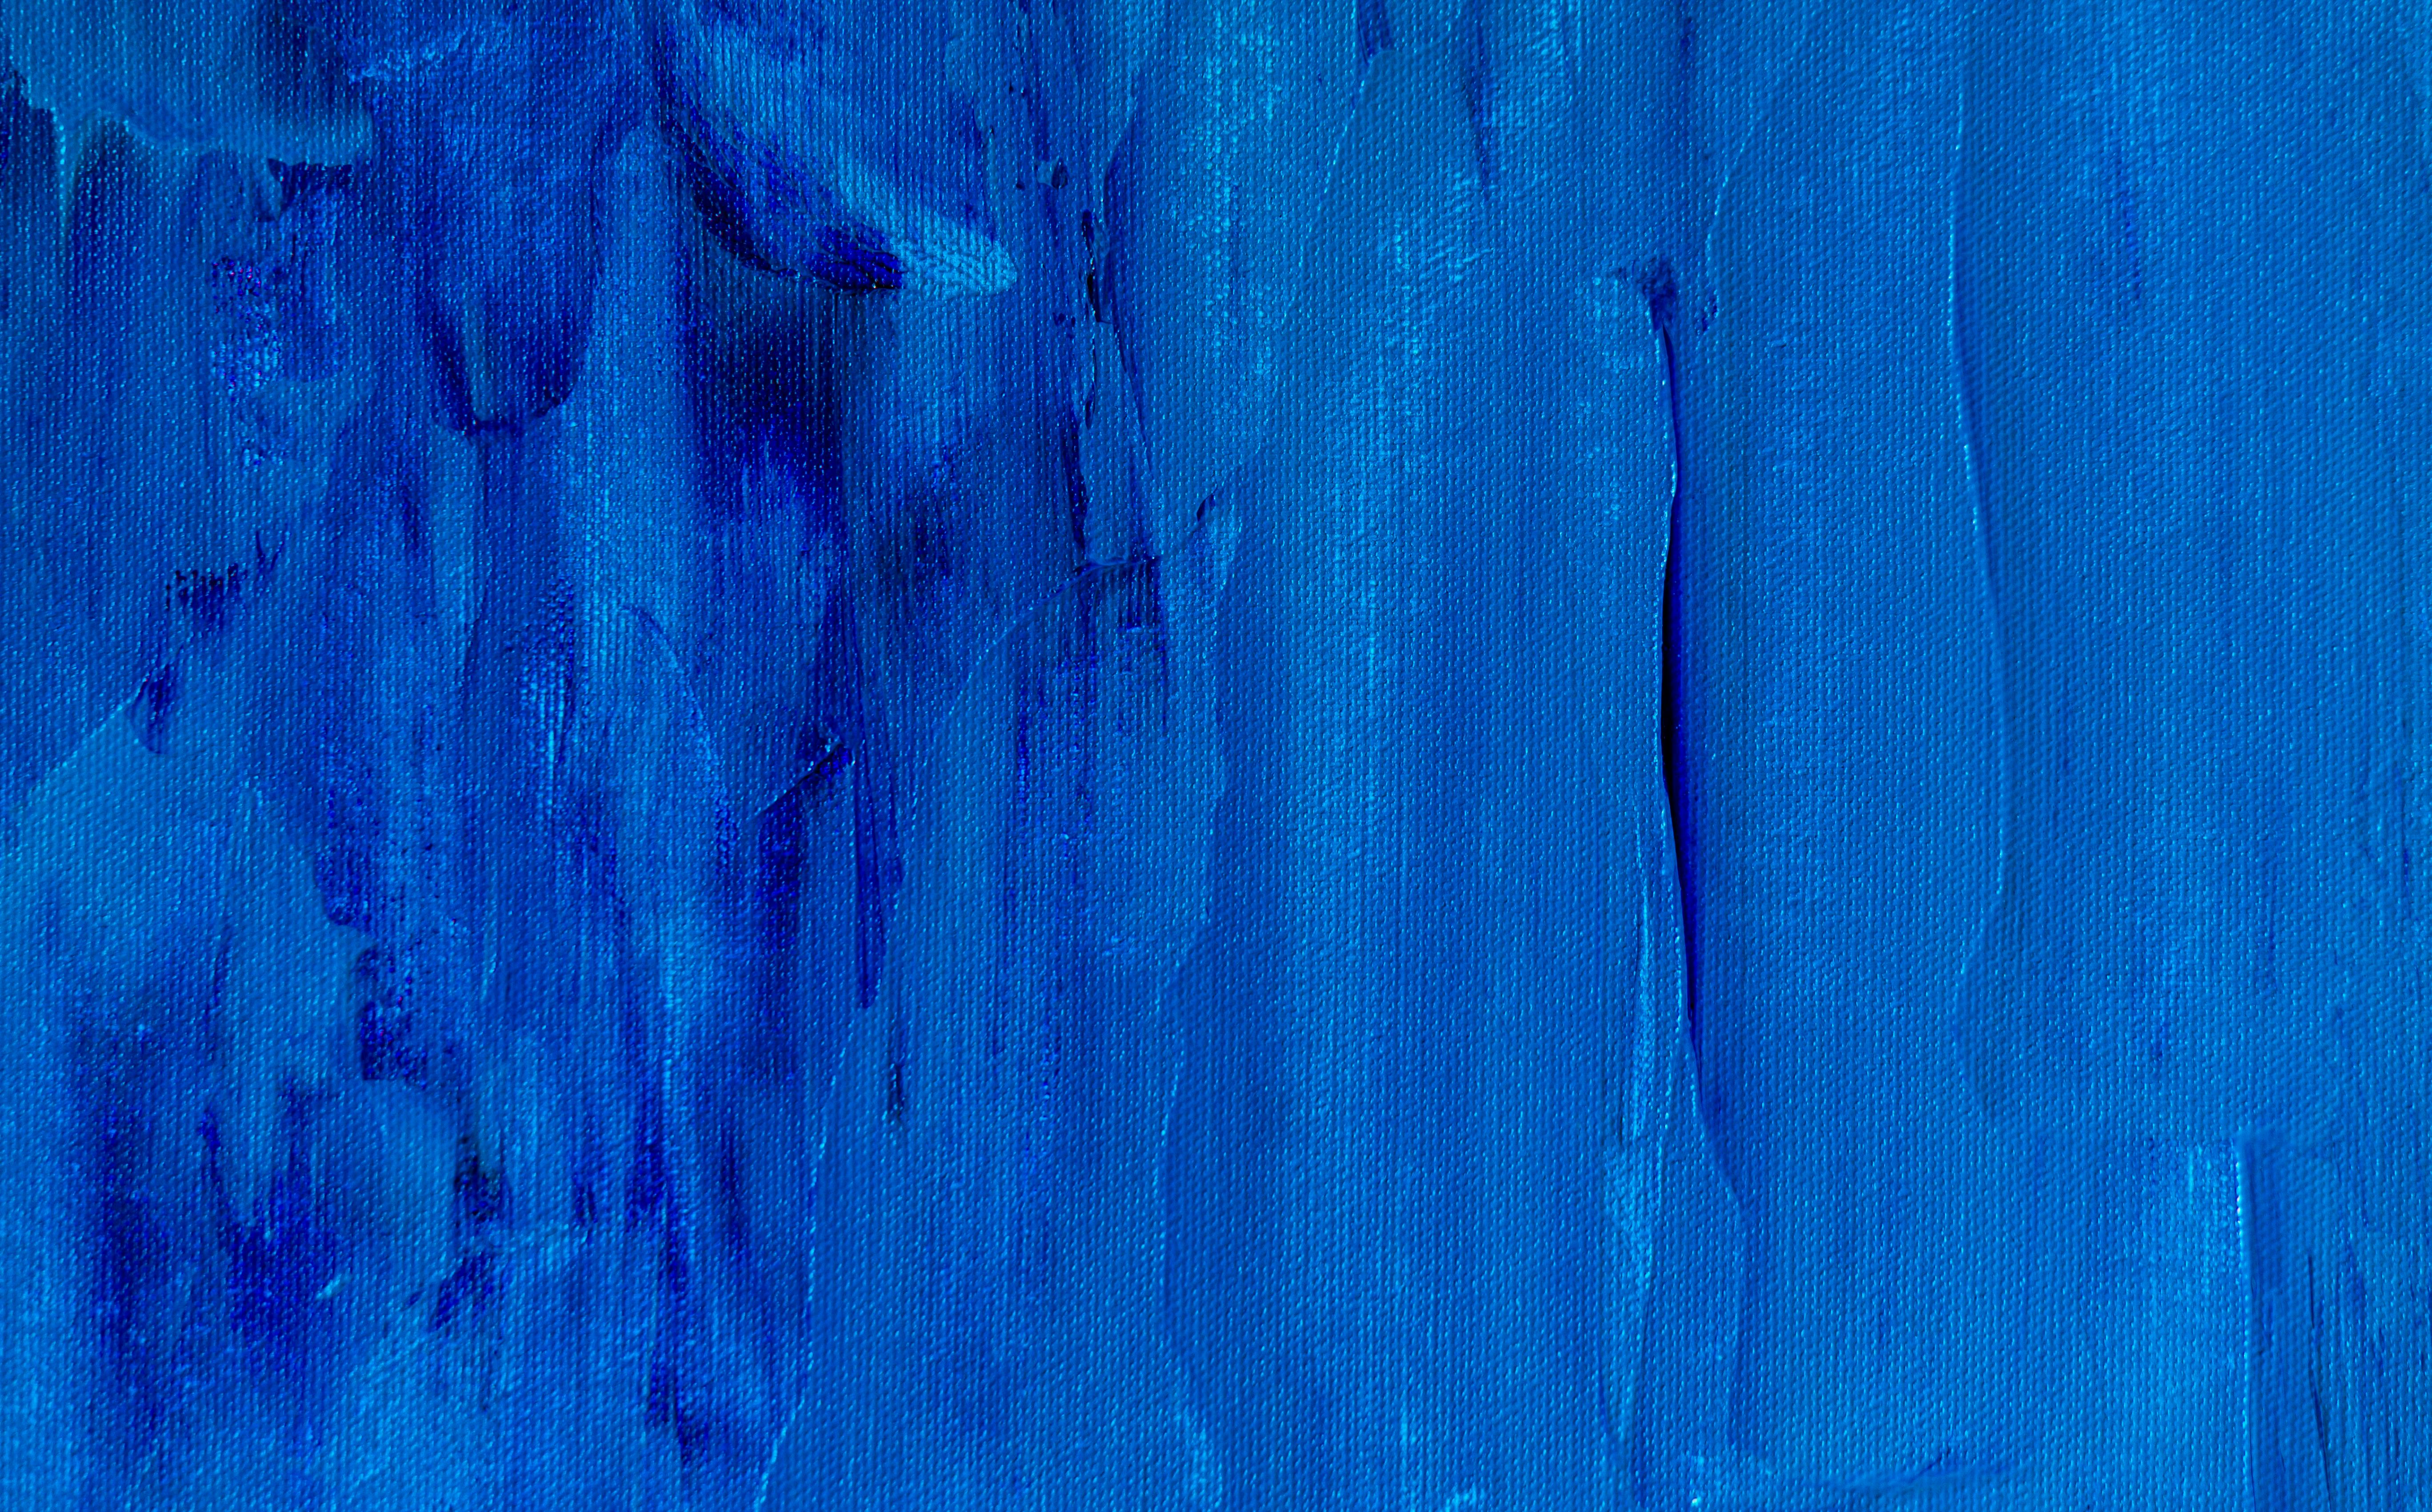 Blue Texture Images - Free Download on Freepik